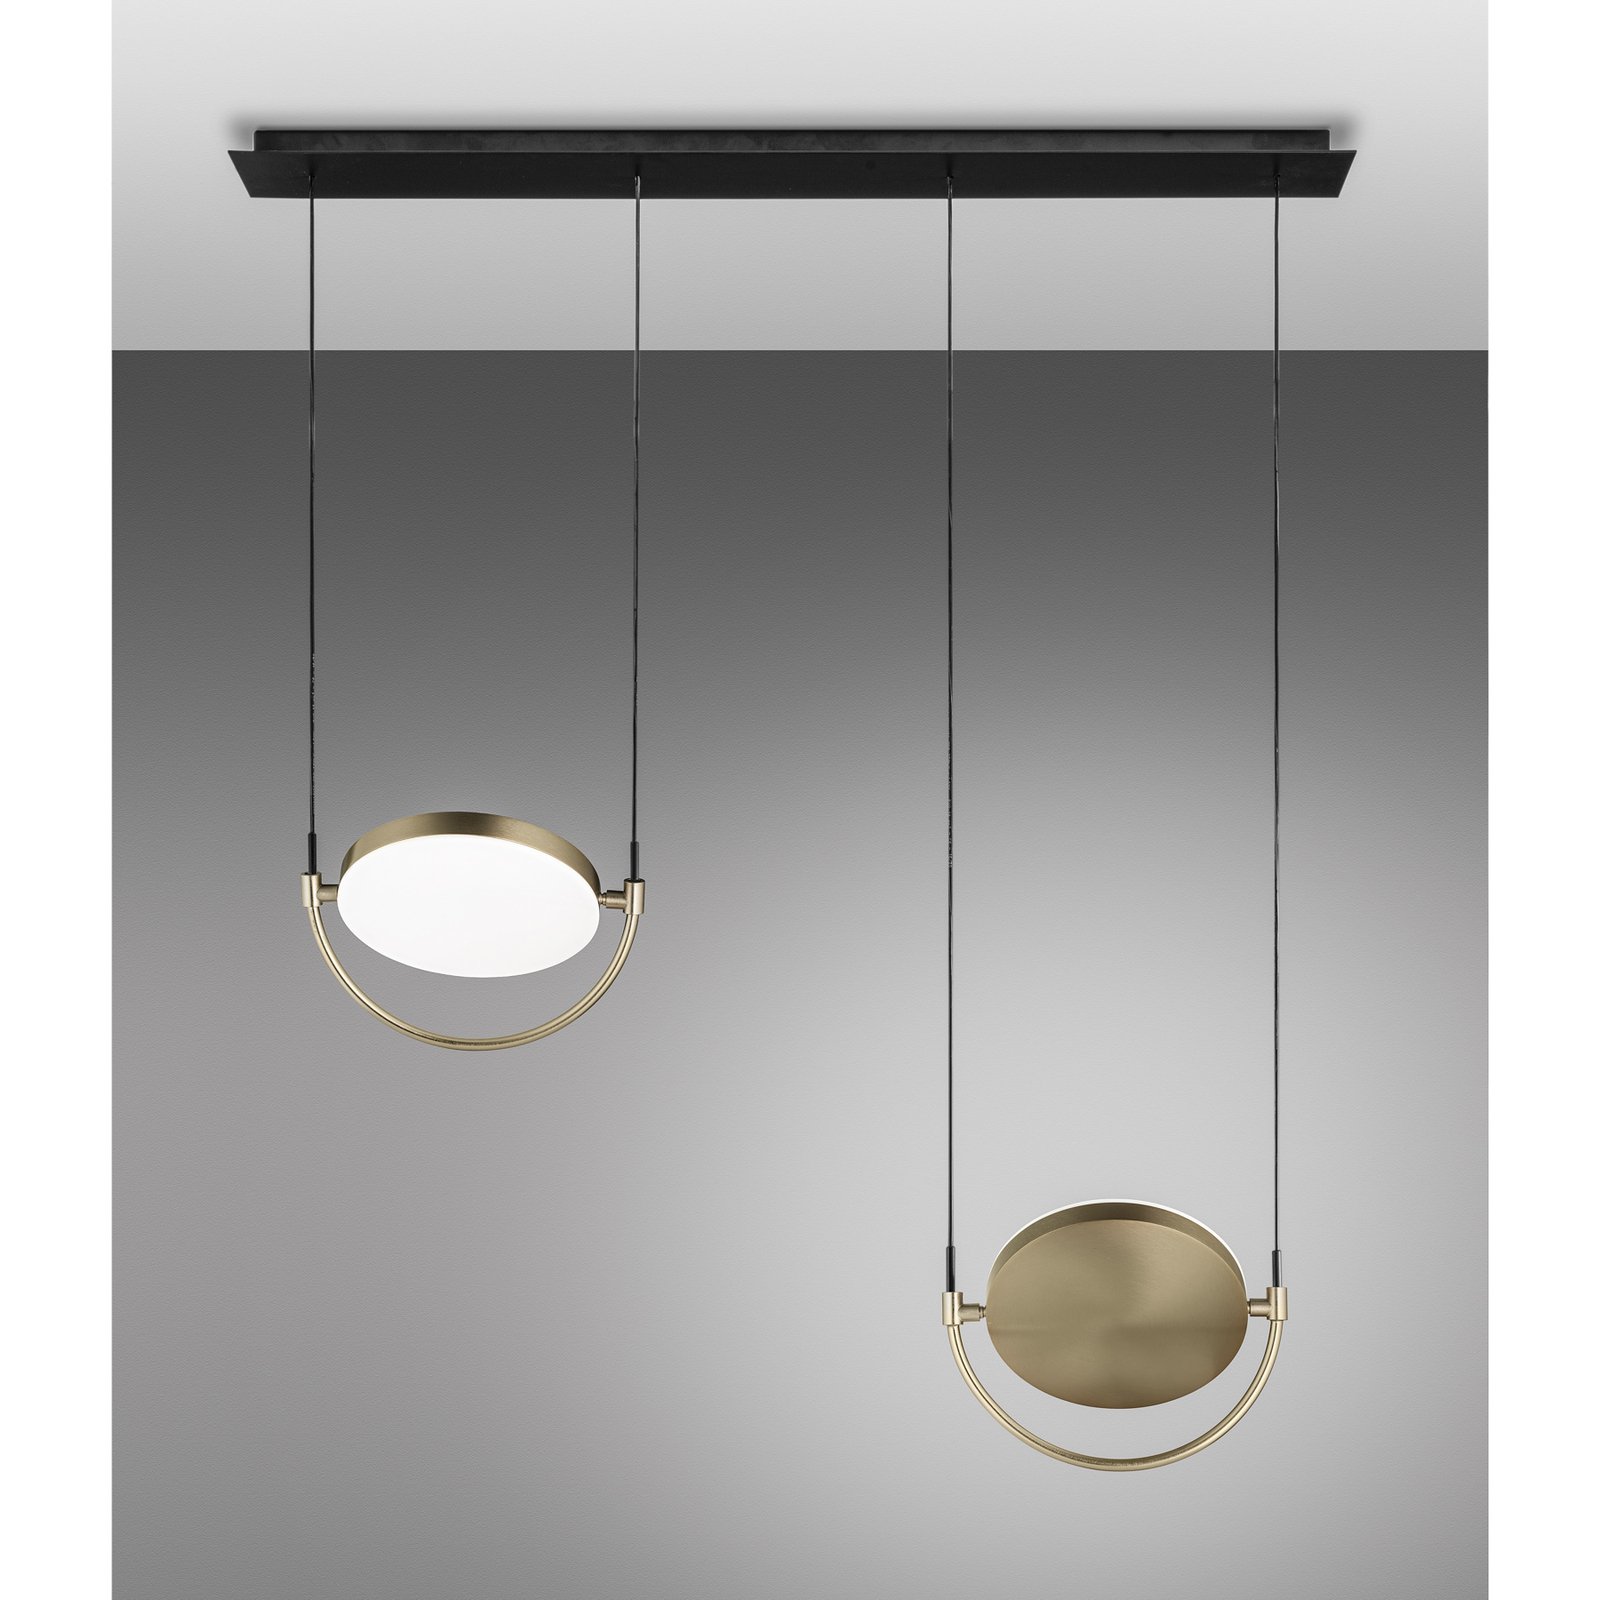 Candeeiro suspenso LED Giotto, 2 luzes, separado, dourado